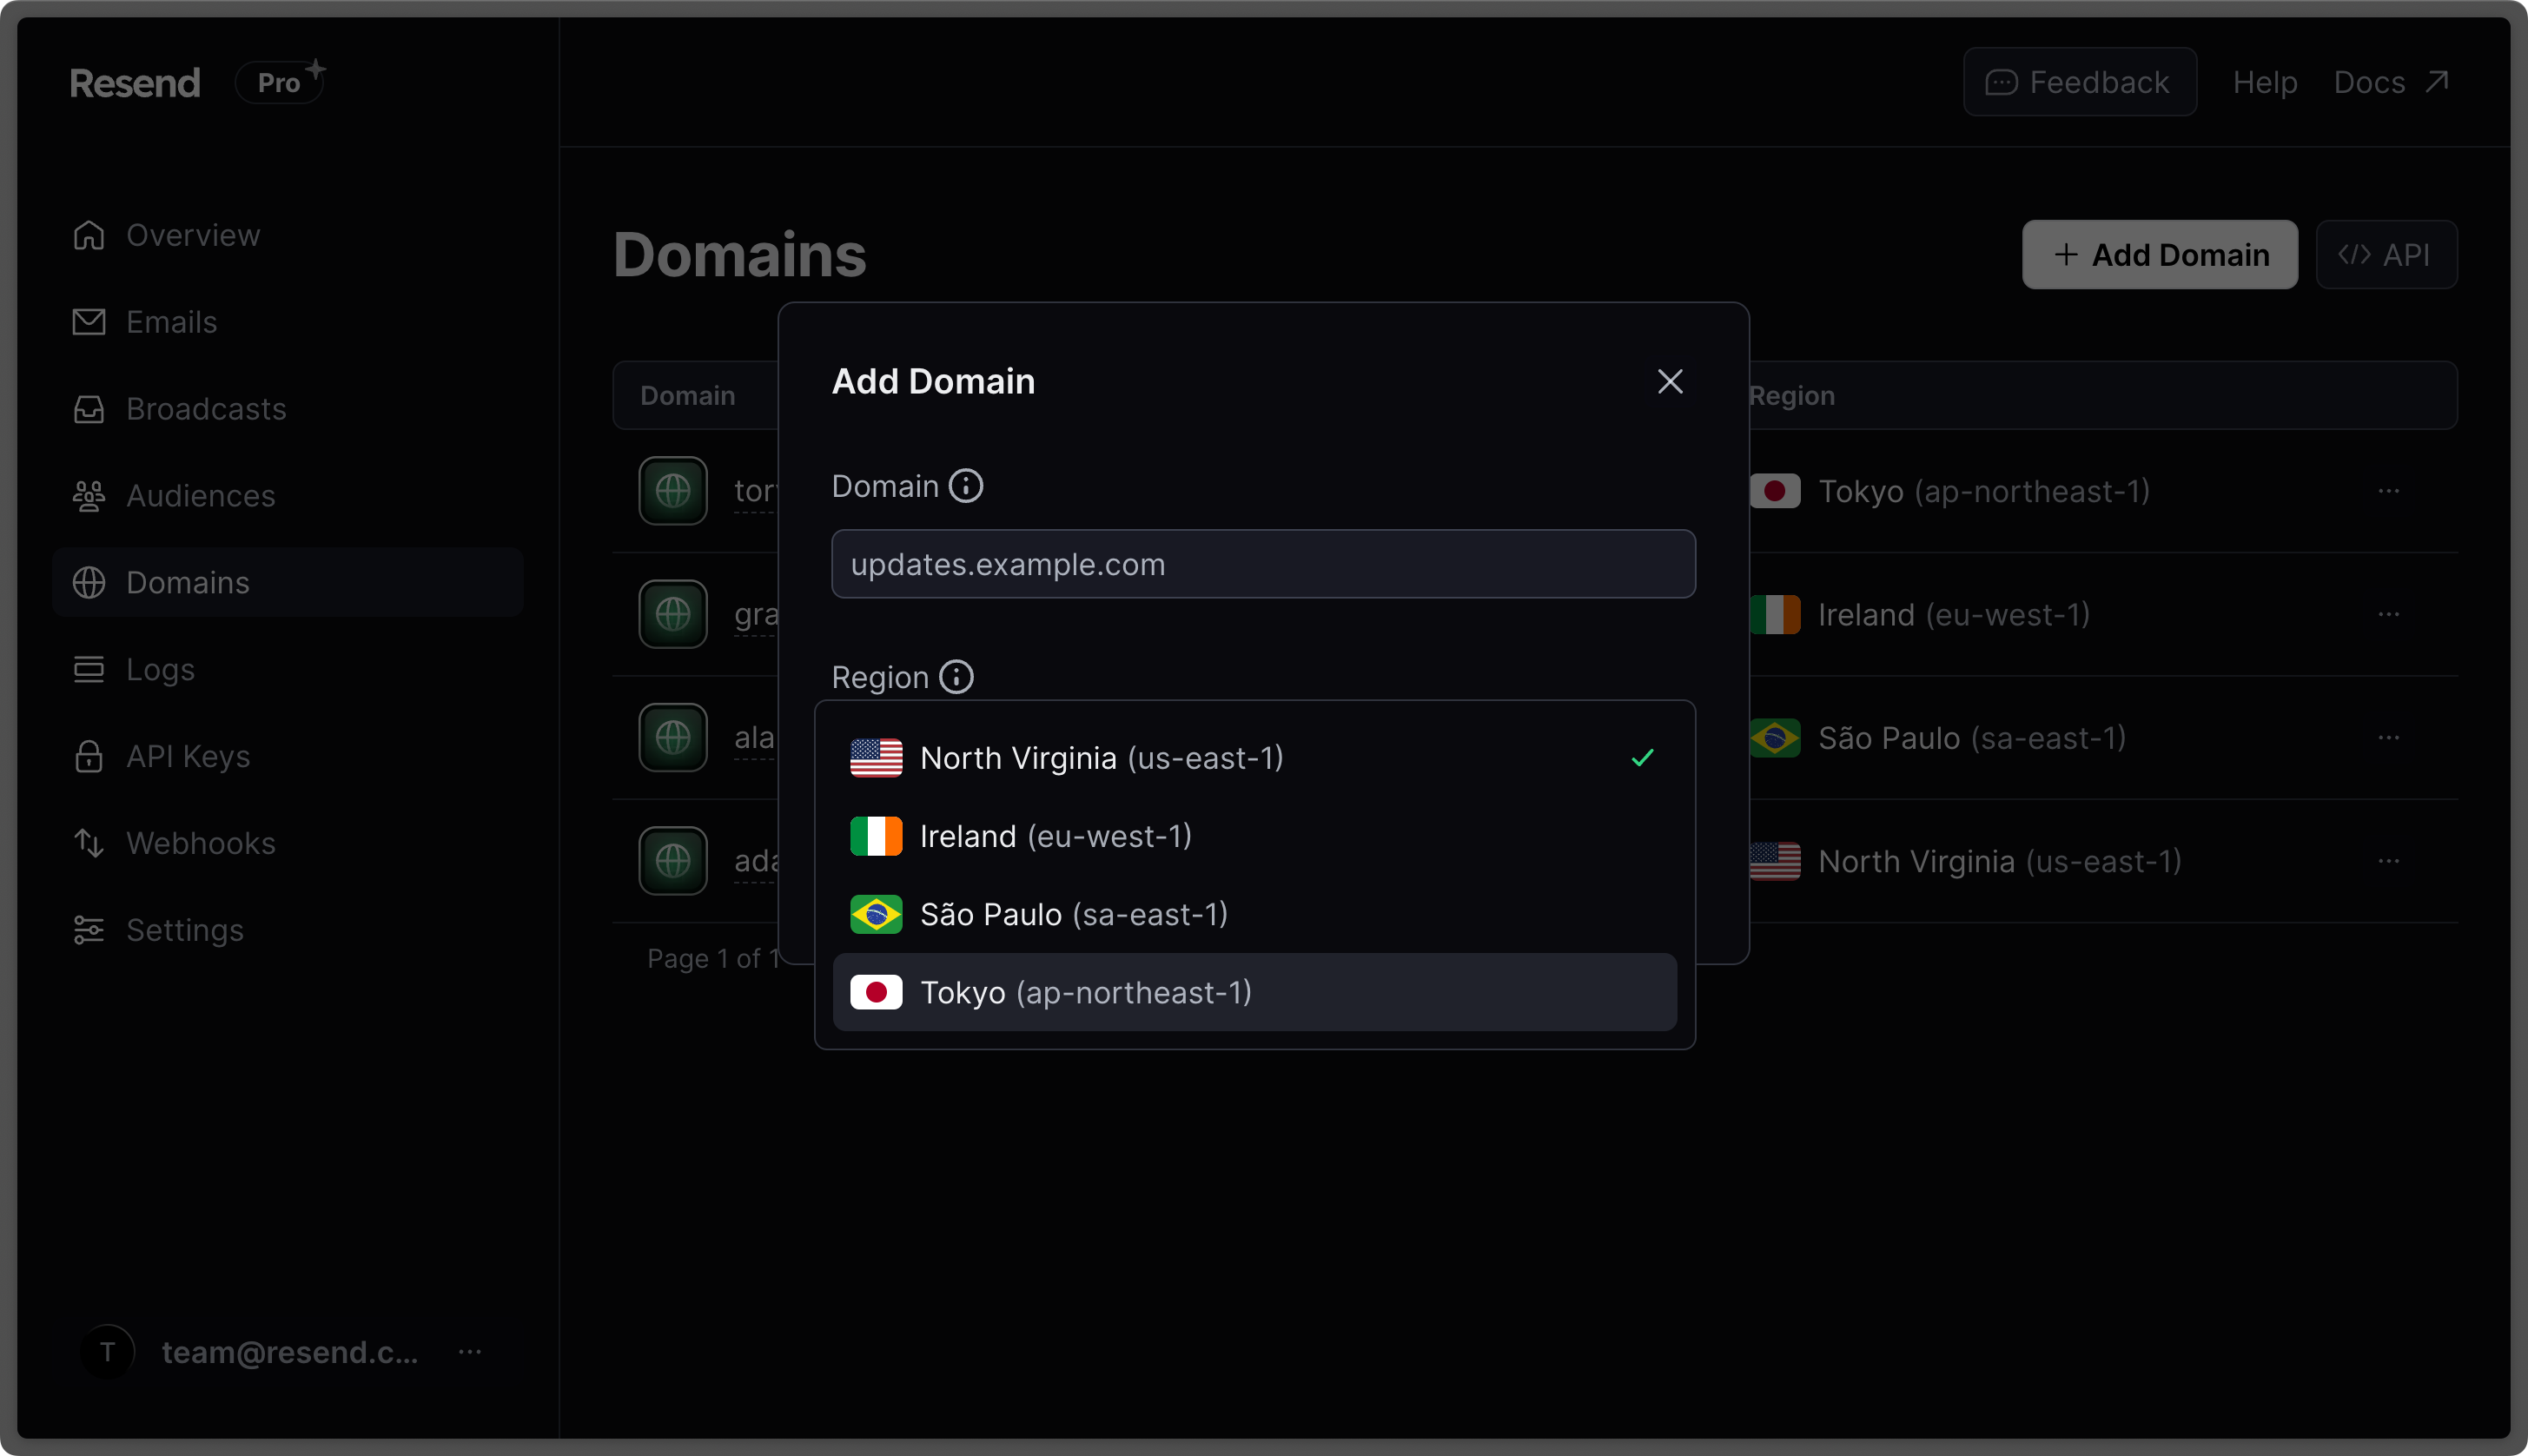 Select a region when adding a domain